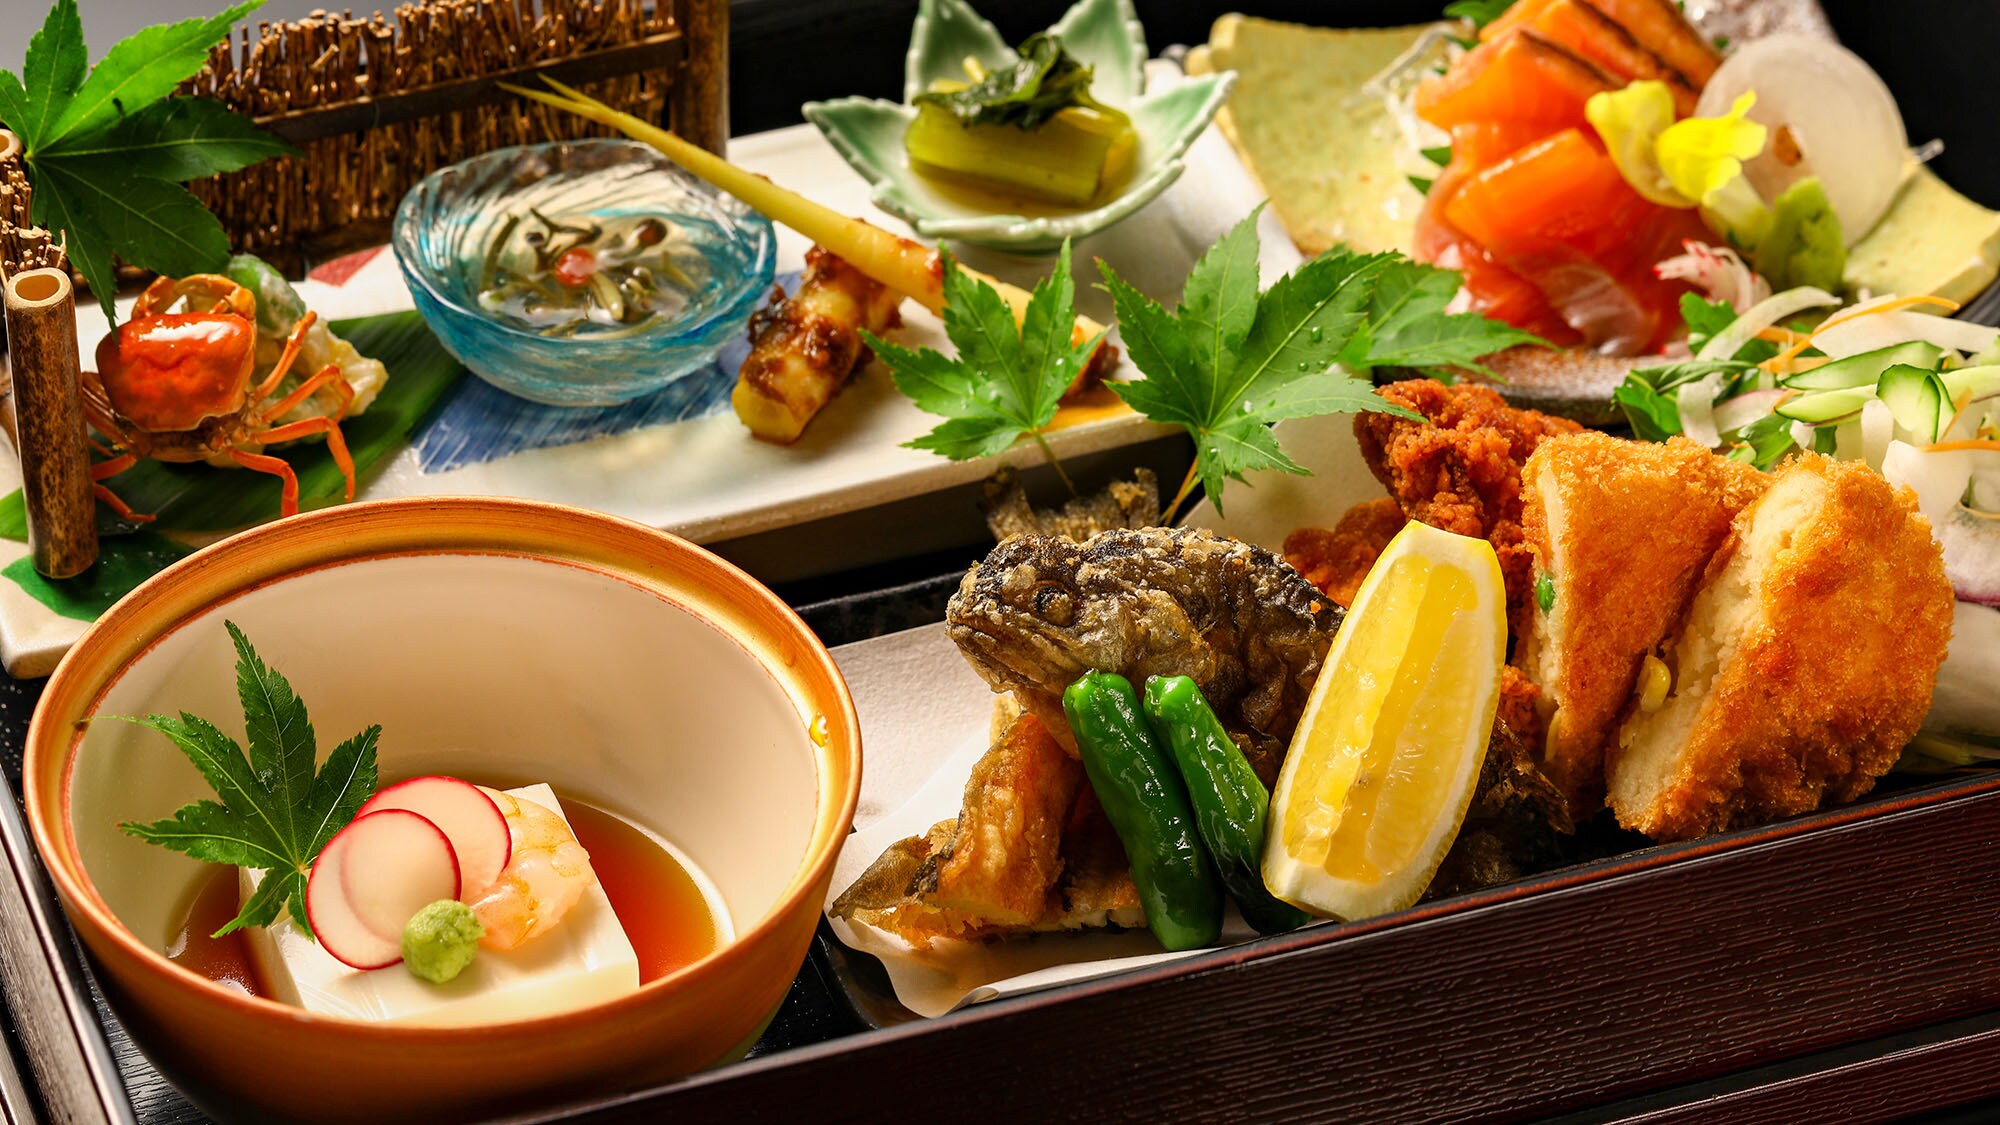 ・[Dinner example] Meals for elementary school children also use plenty of Shinshu ingredients